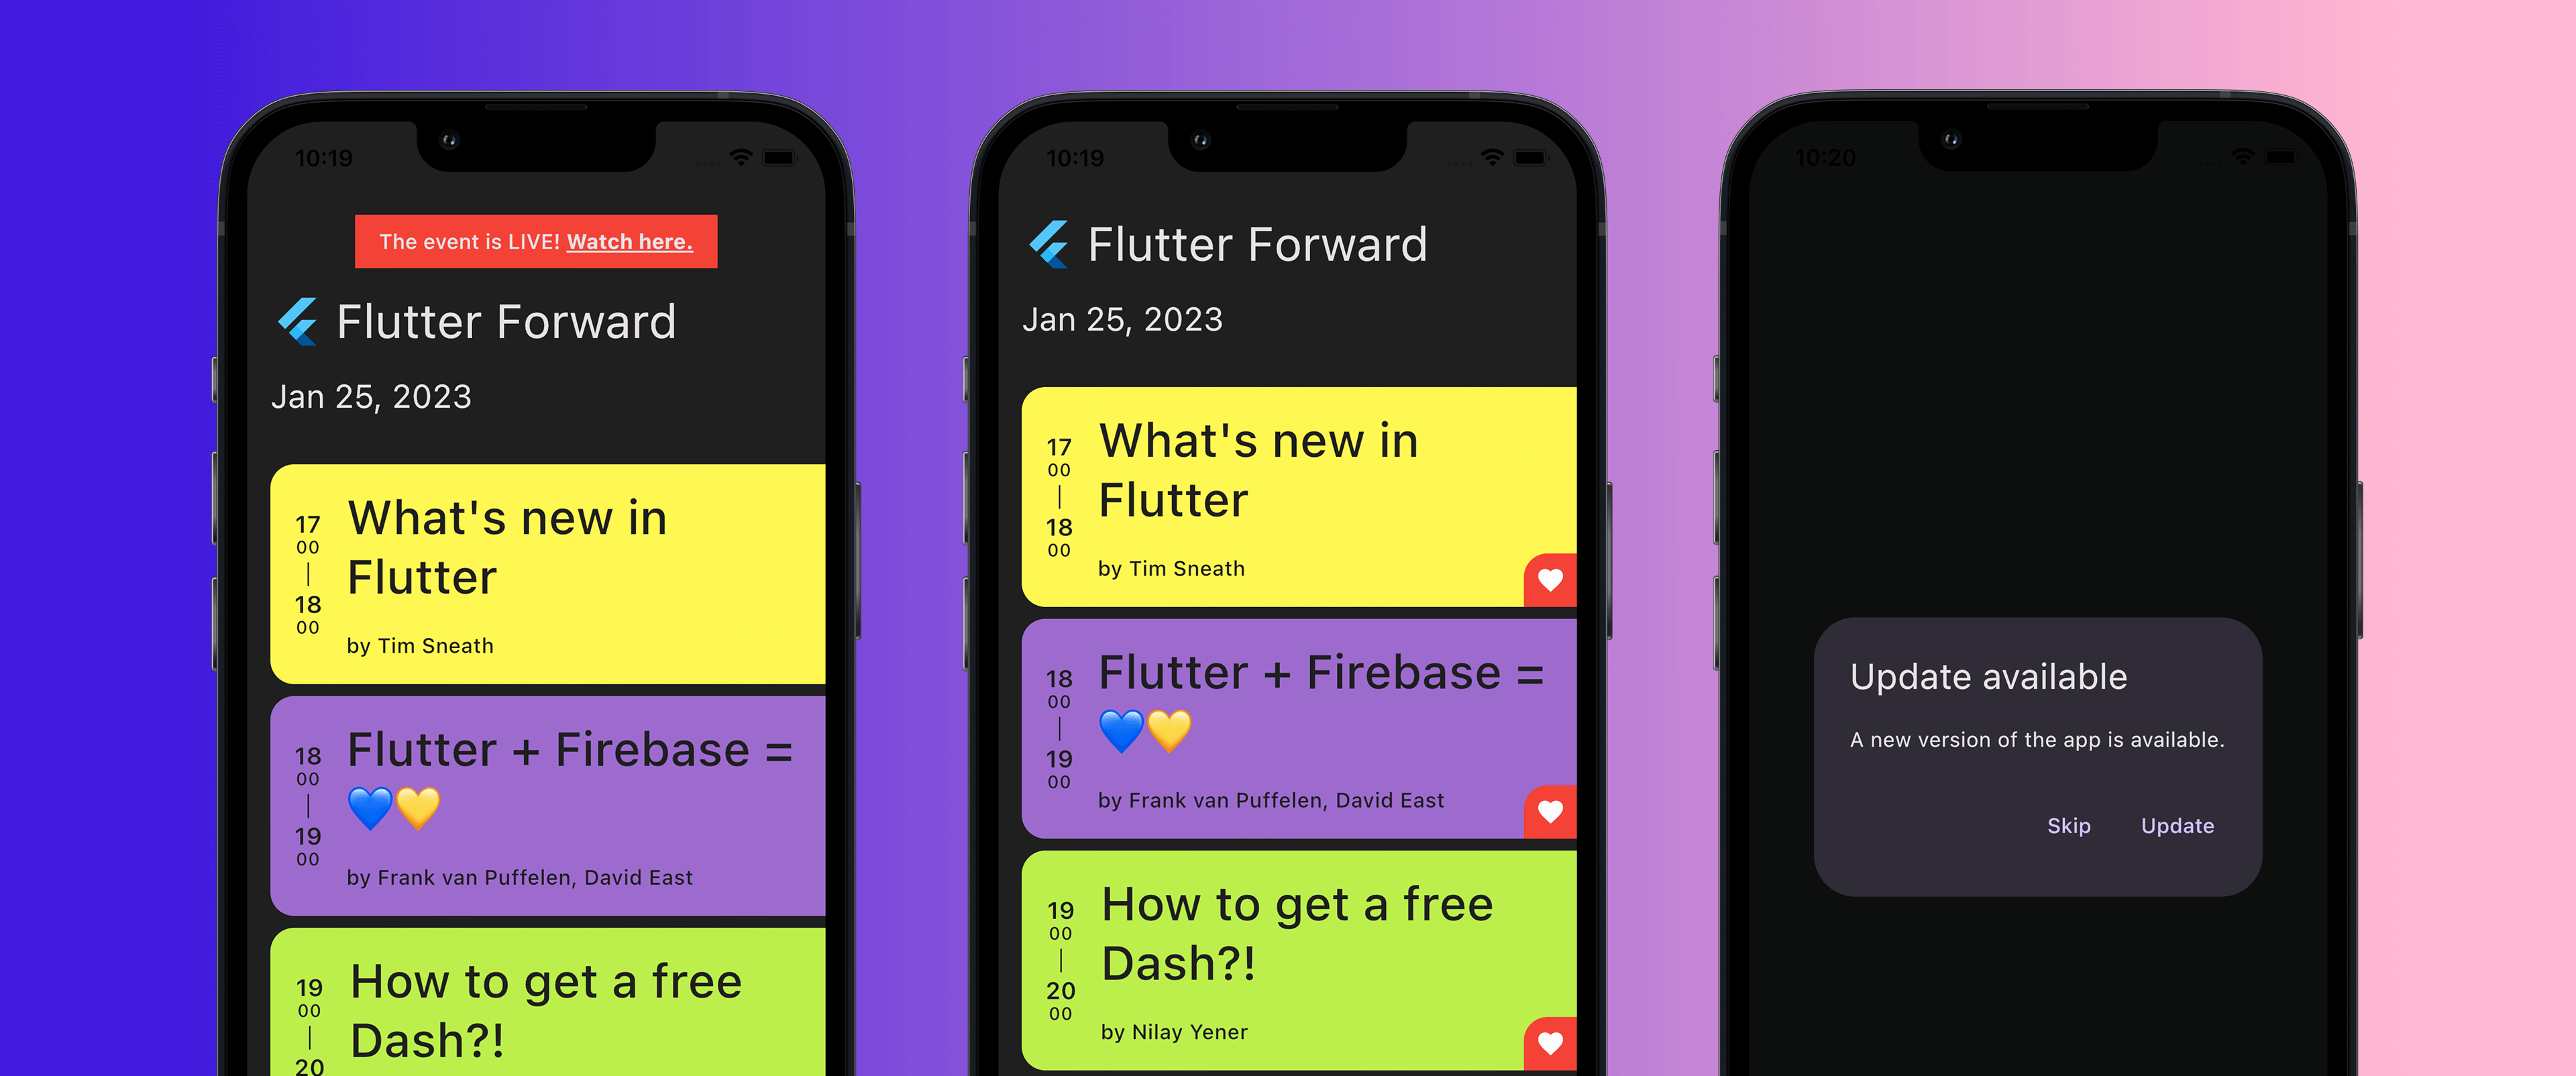 Flutter Forward agenda app header